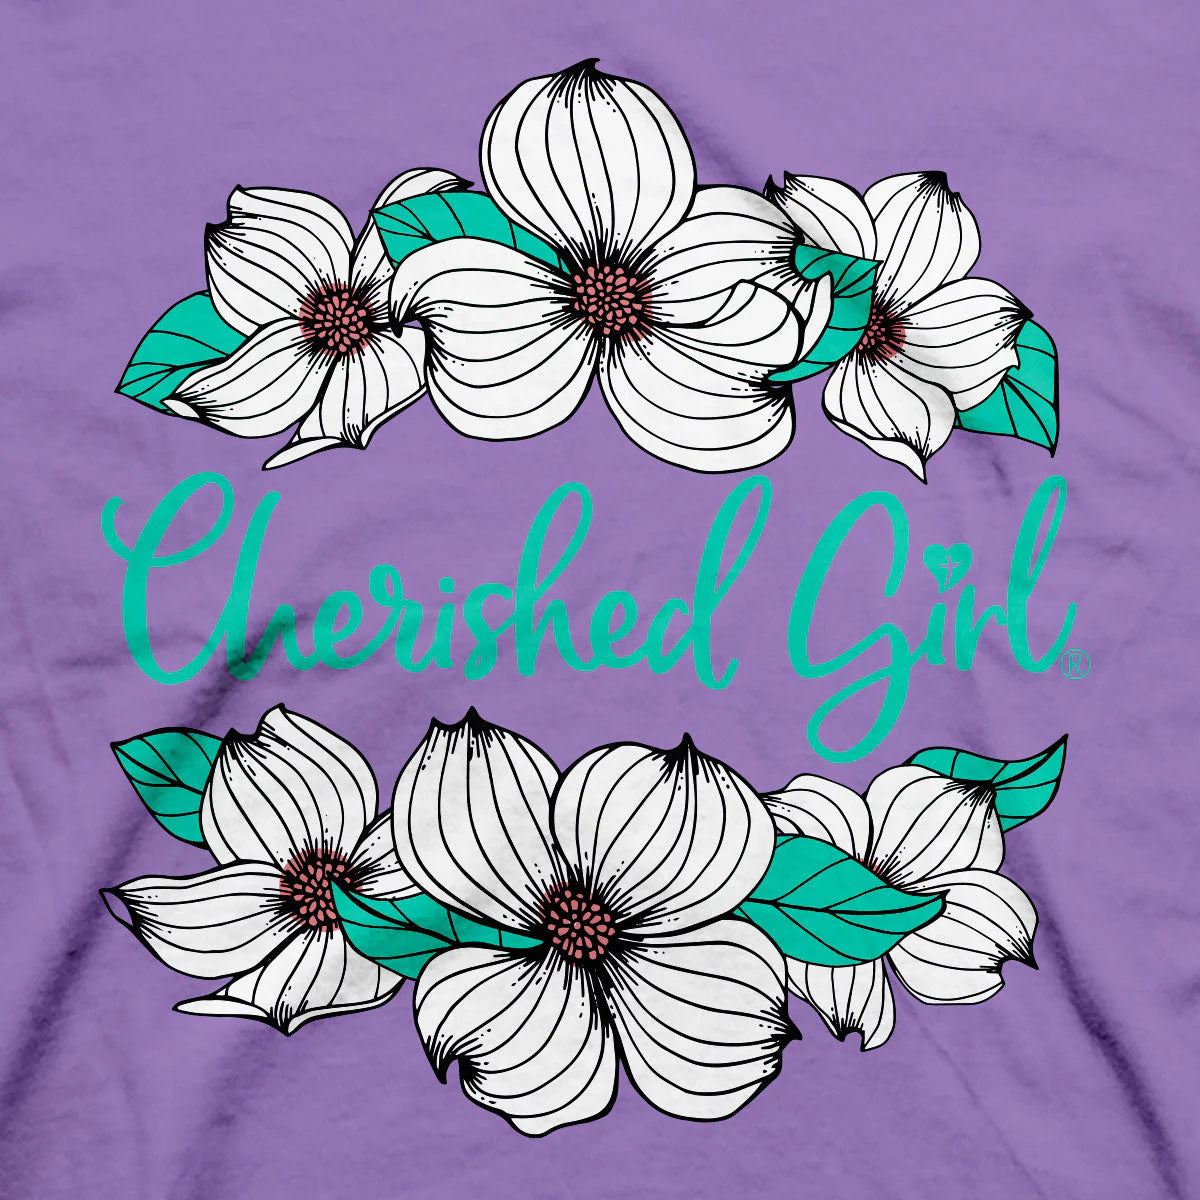 Cherished Girl Womens T-Shirt Rescued Cherished Girl® Apparel Short Sleeve T-shirts Women's